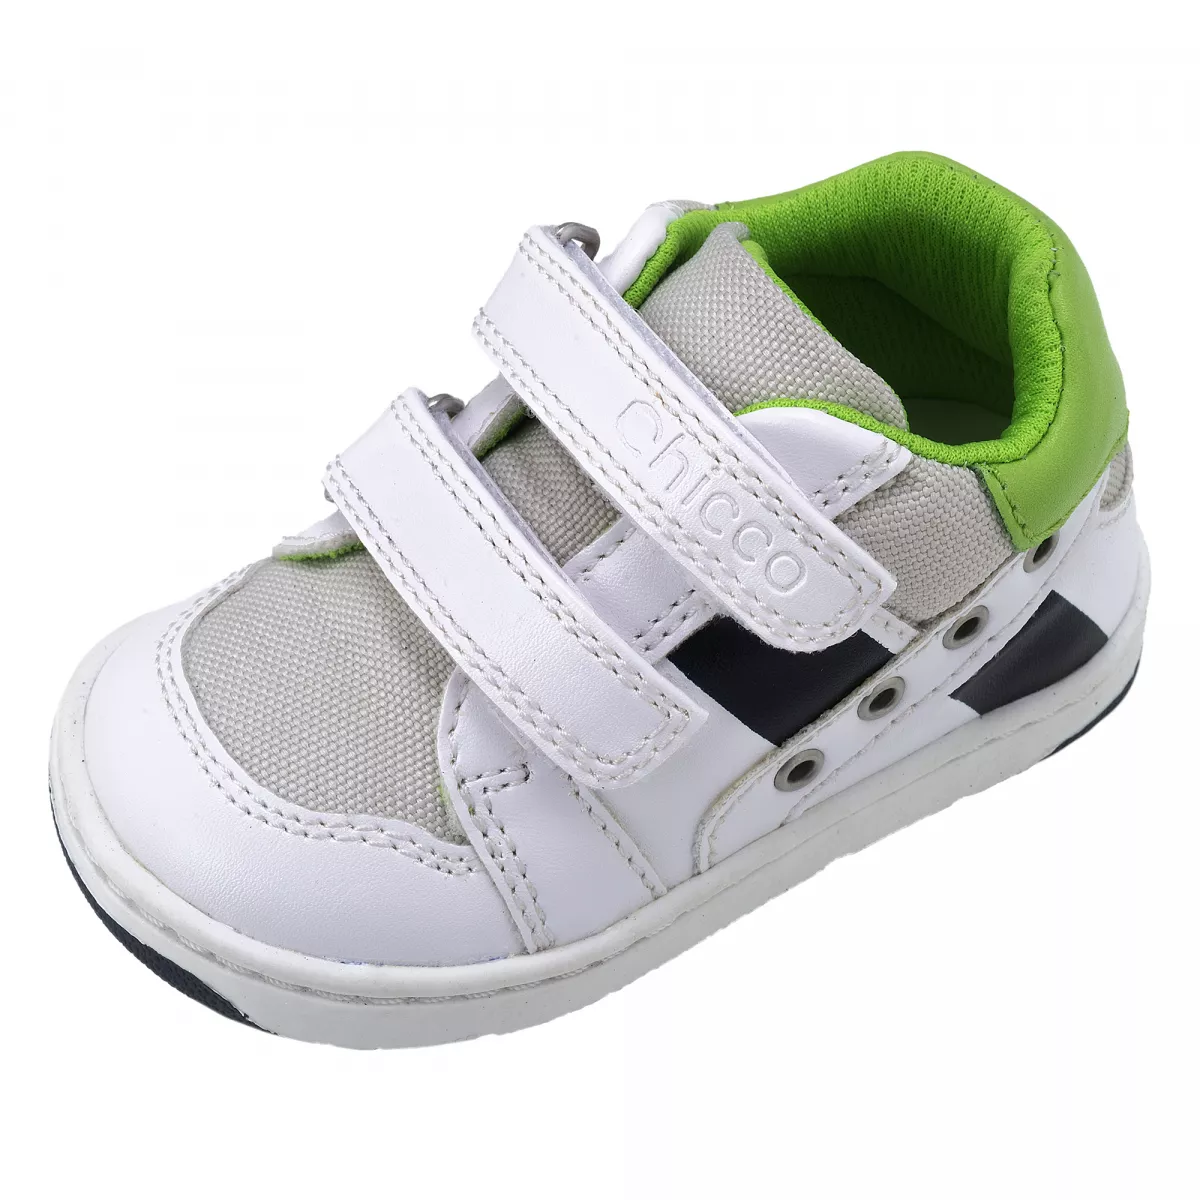 Pantofi sport copii Chicco Giuliano, alb cu model, 65653, 18